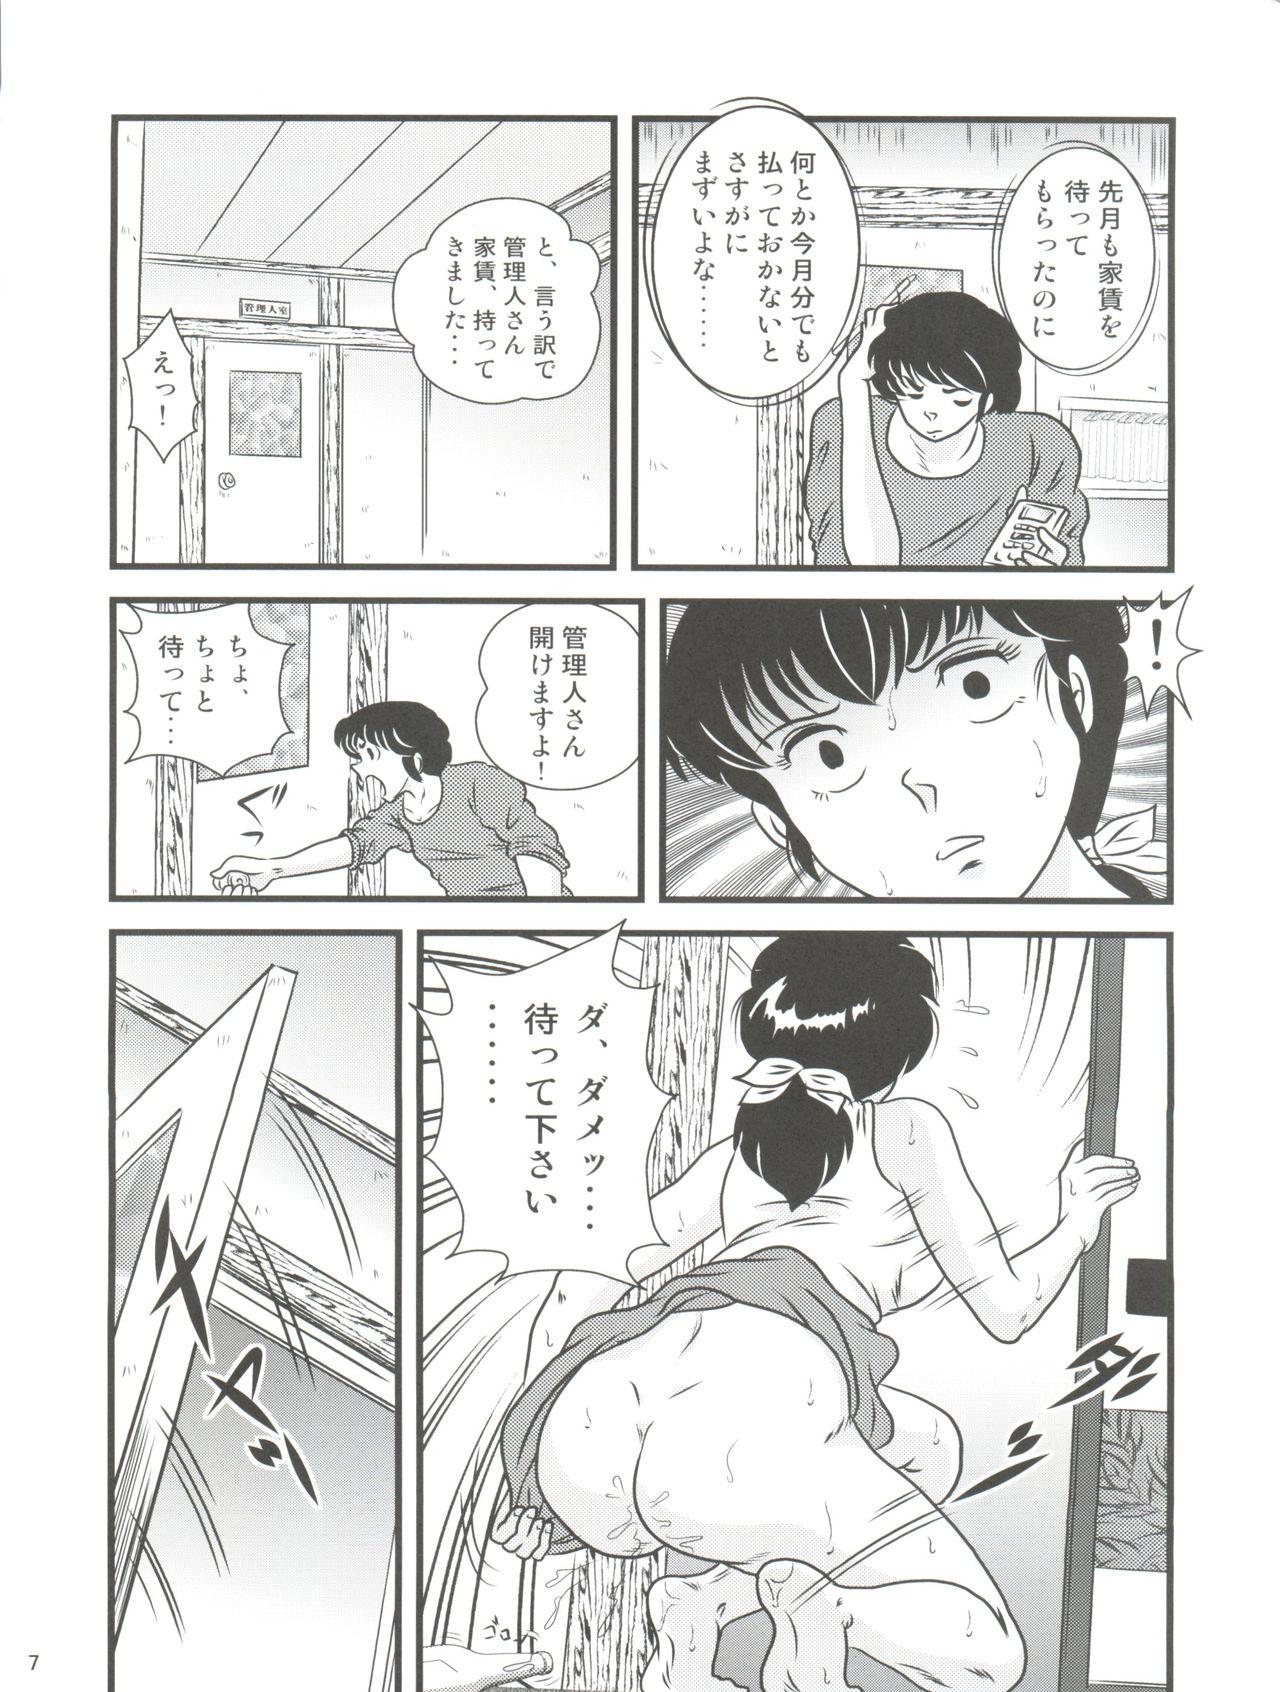 Negao Fairy 17 - Maison ikkoku Erotica - Page 7